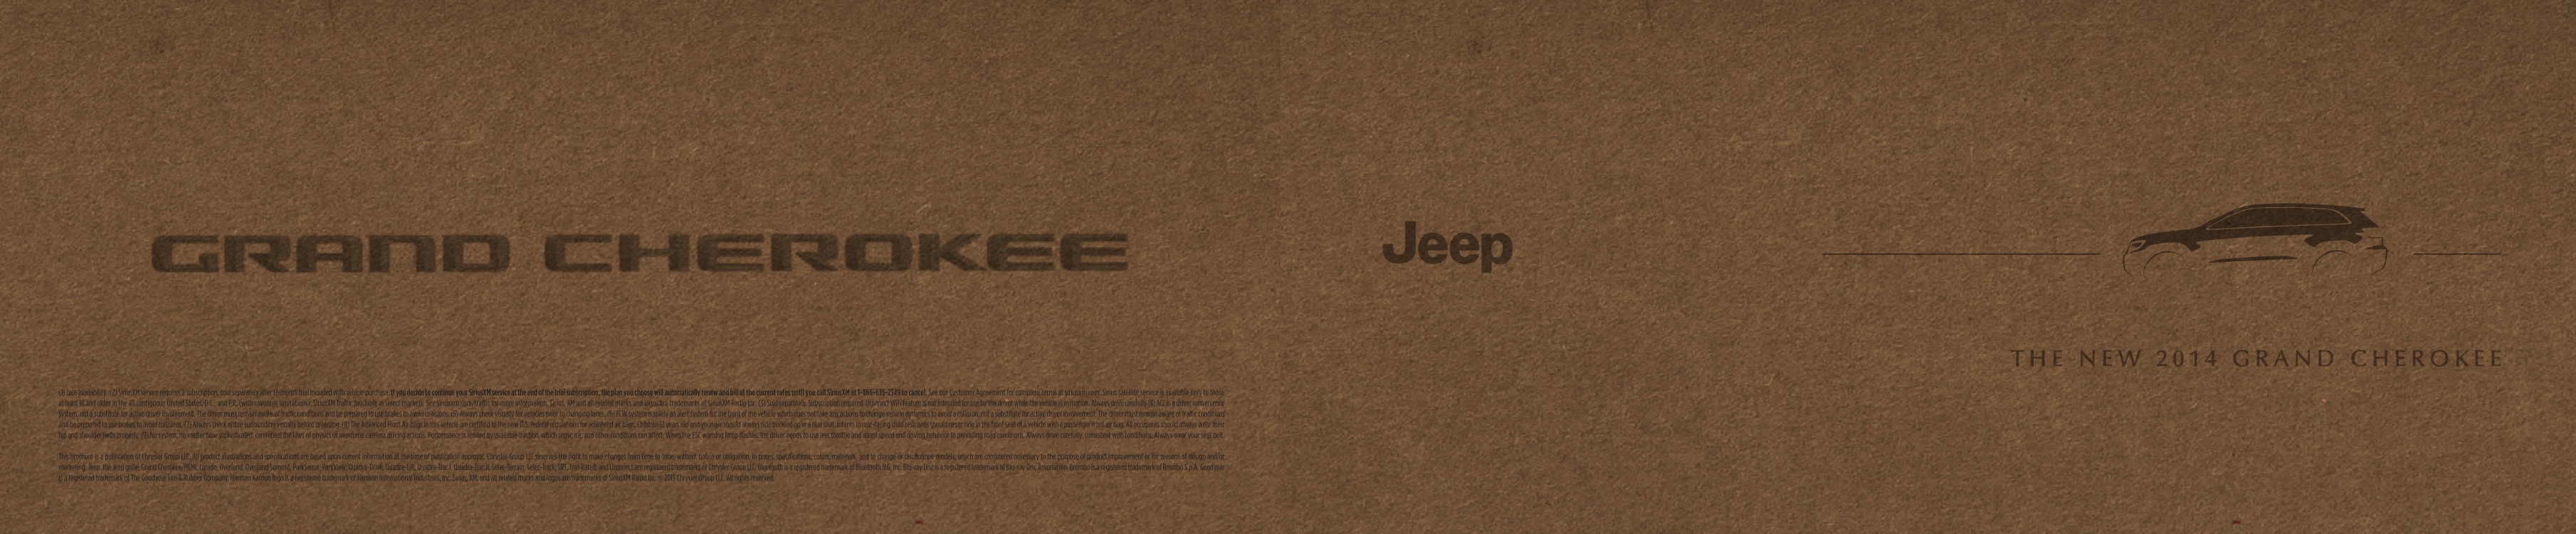 2014 Jeep Grand Cherokee Brochure